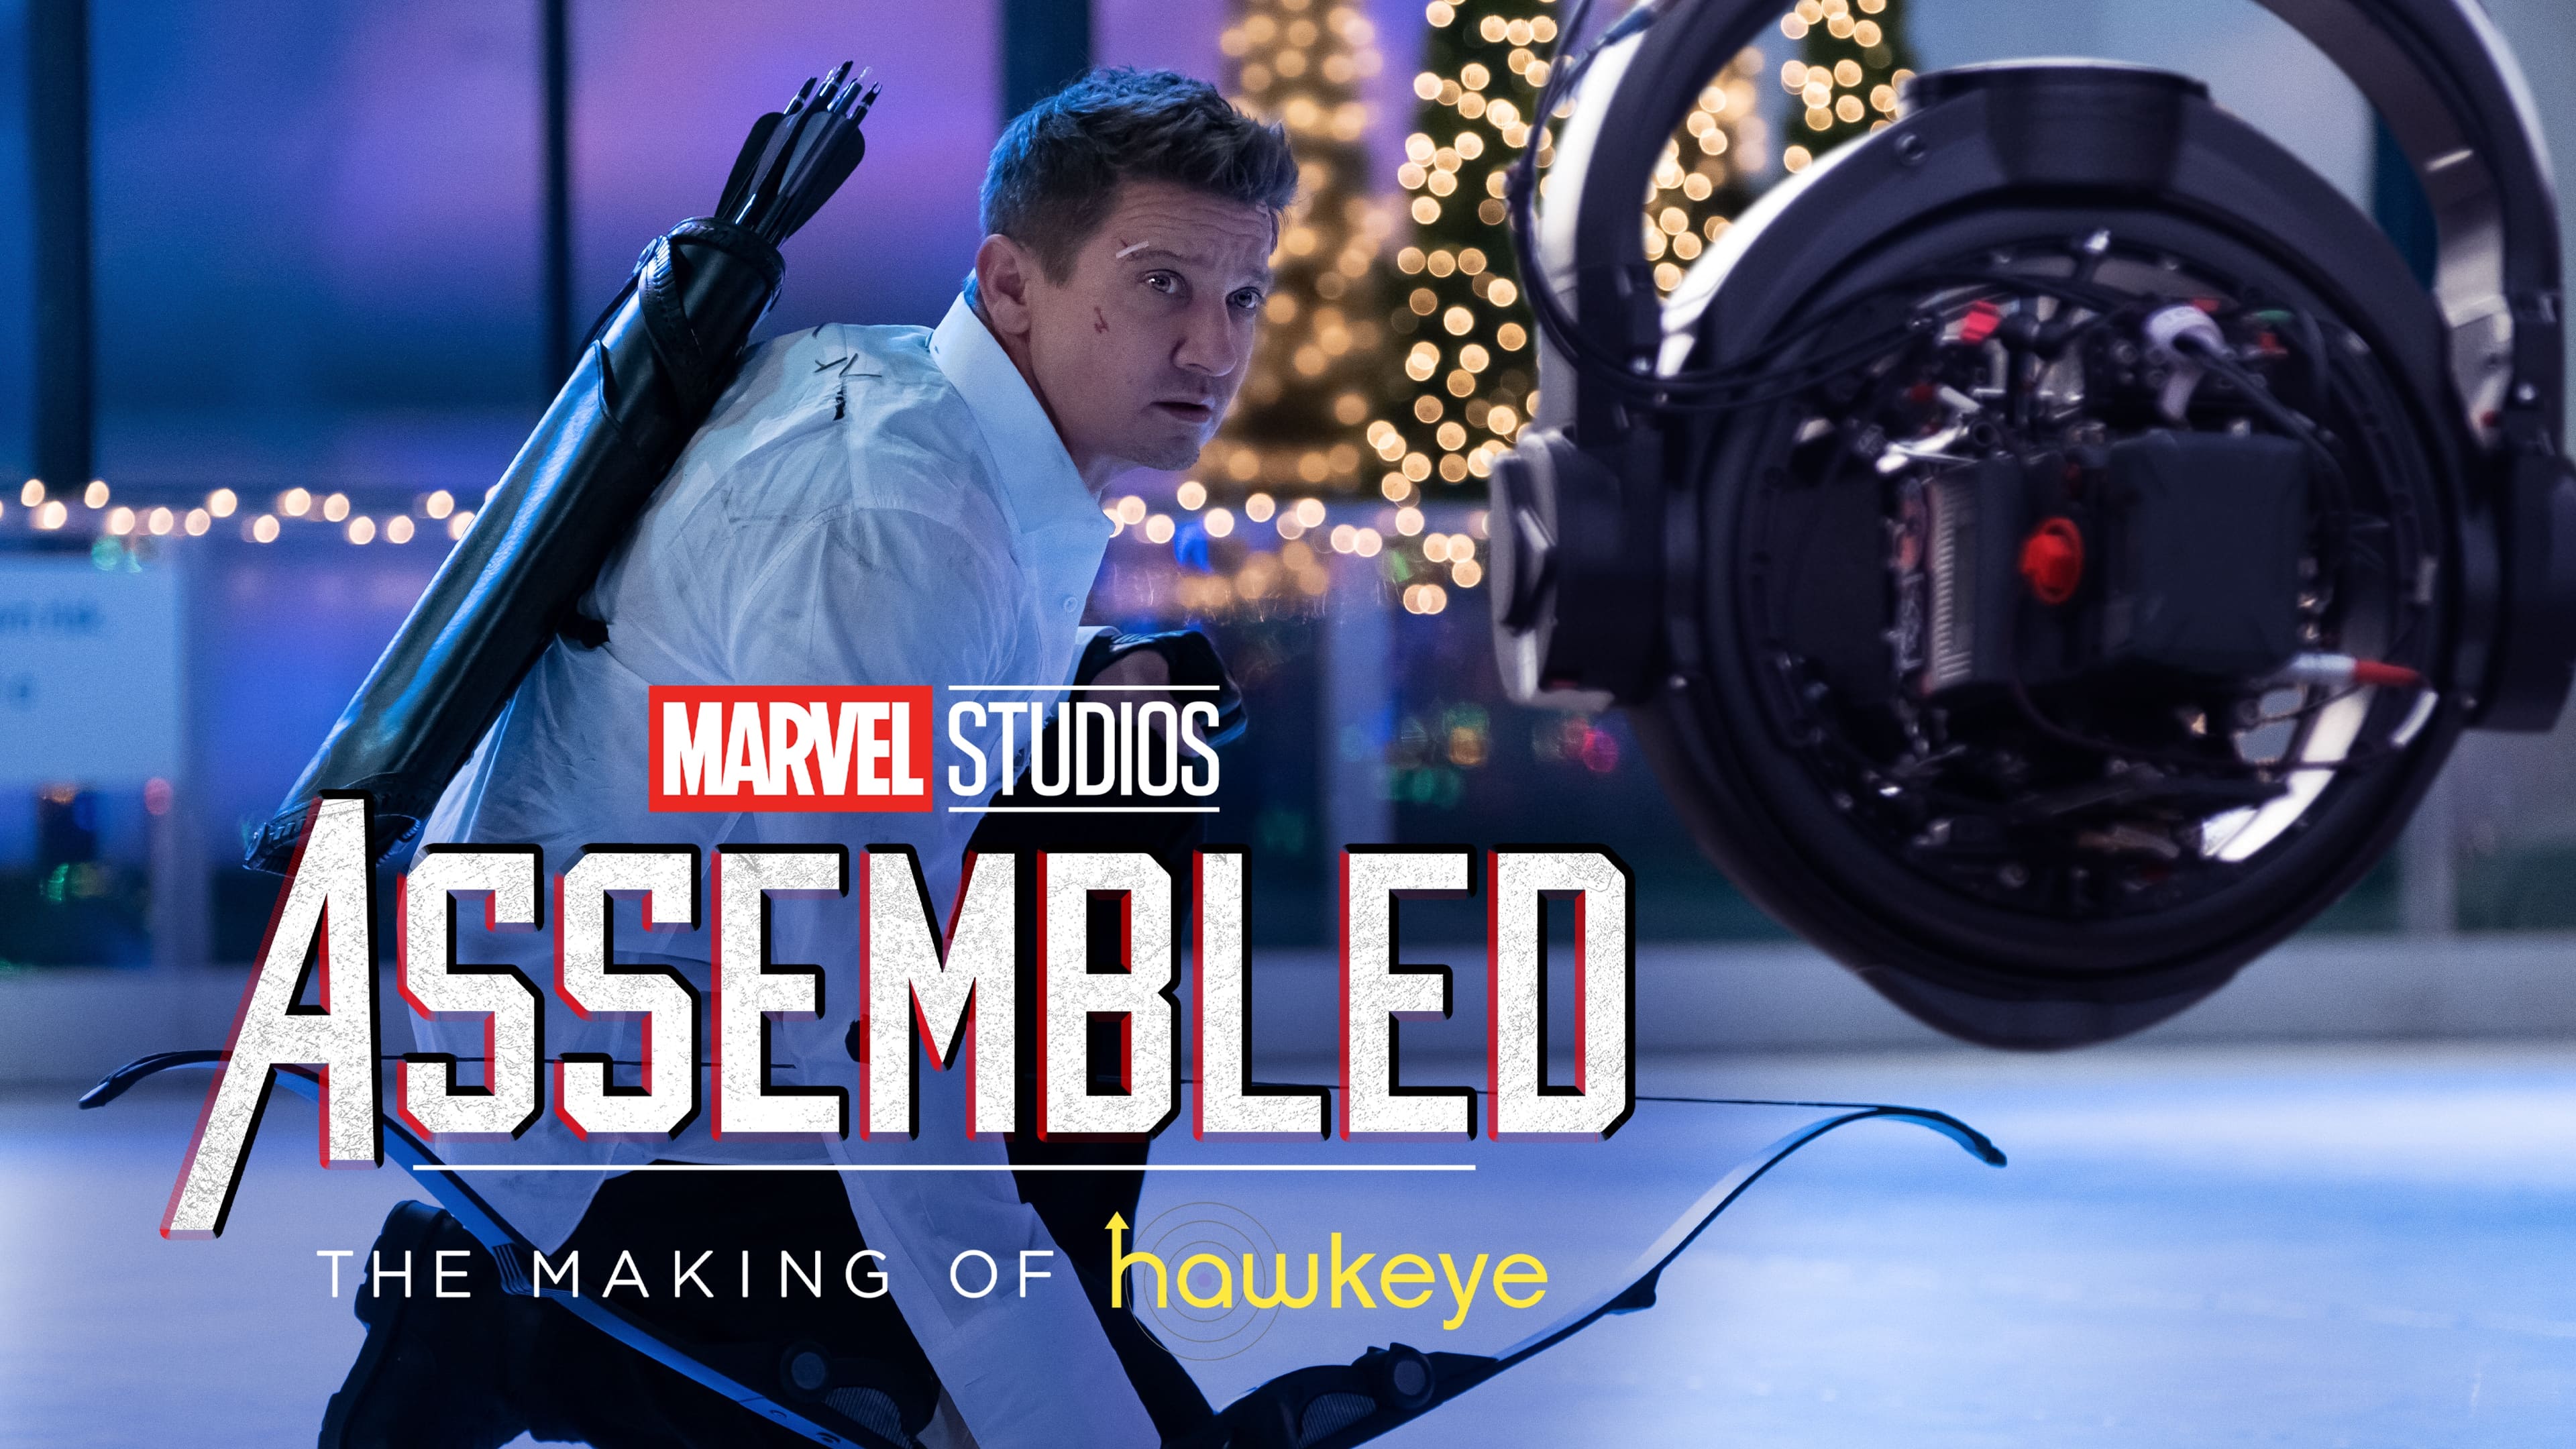 Marvel Studios Assembled: The Making of Hawkeye (2022)